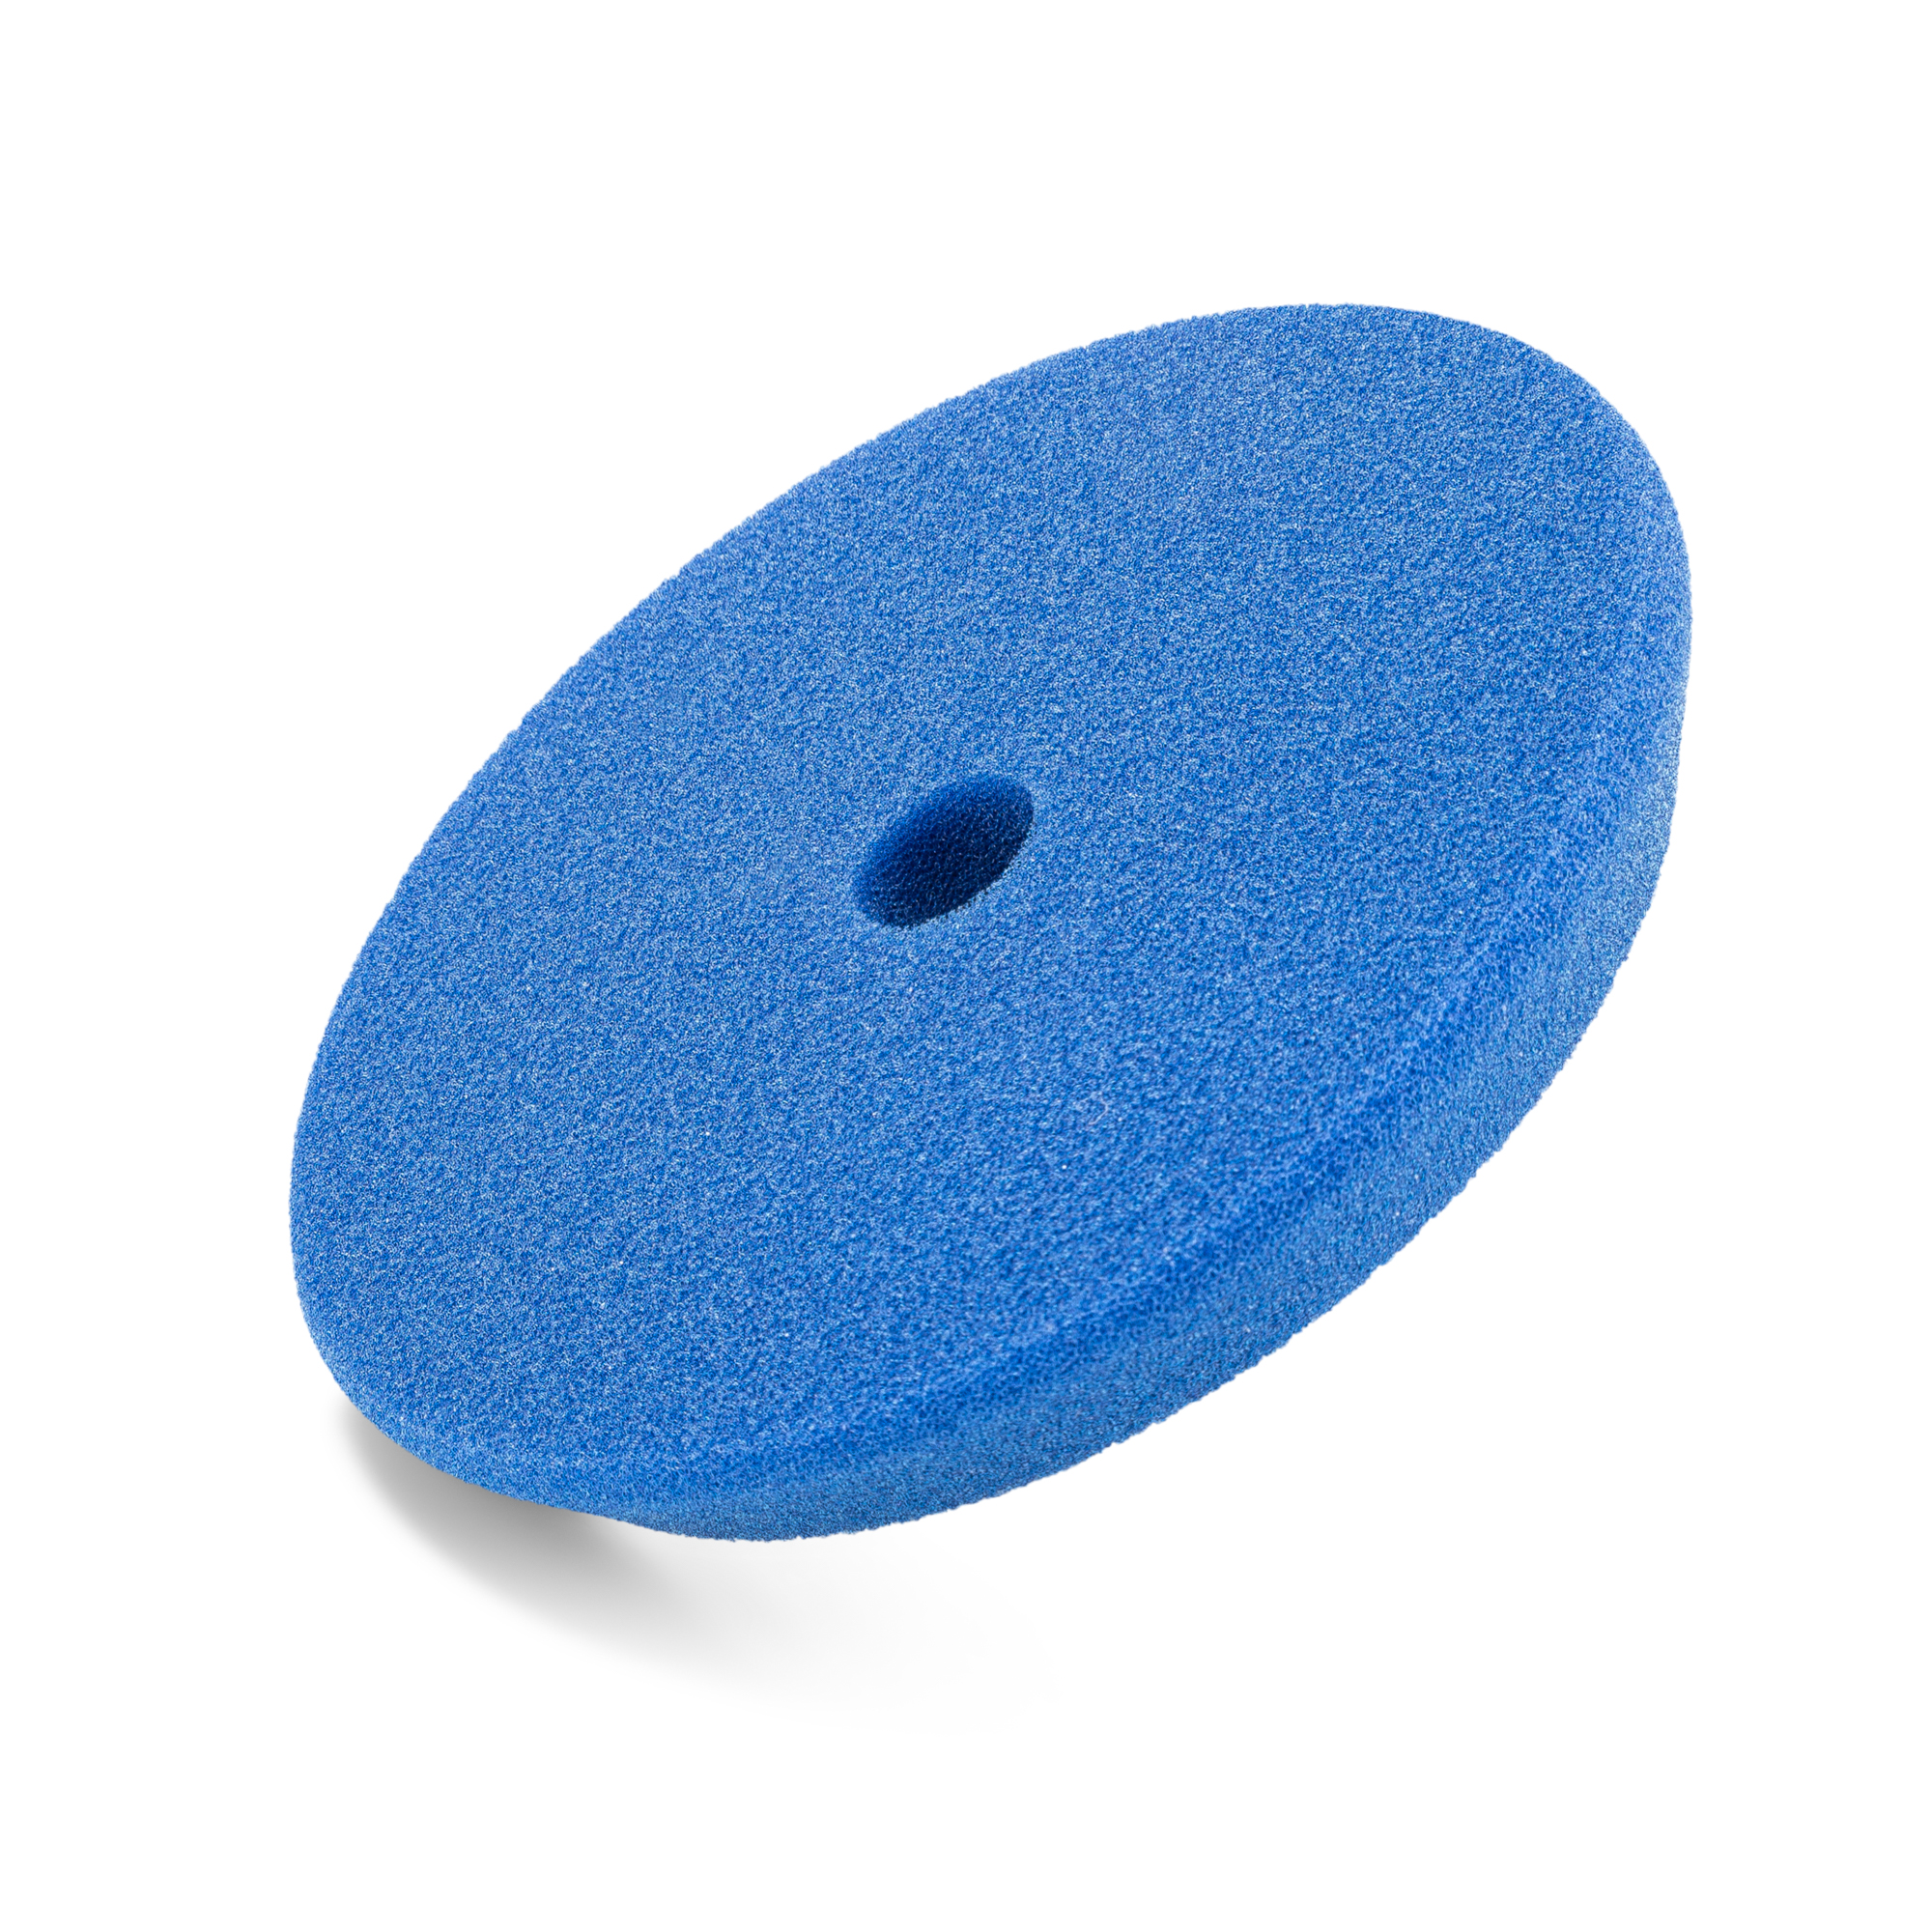 Ewocar Hard Blue Polishing Pad